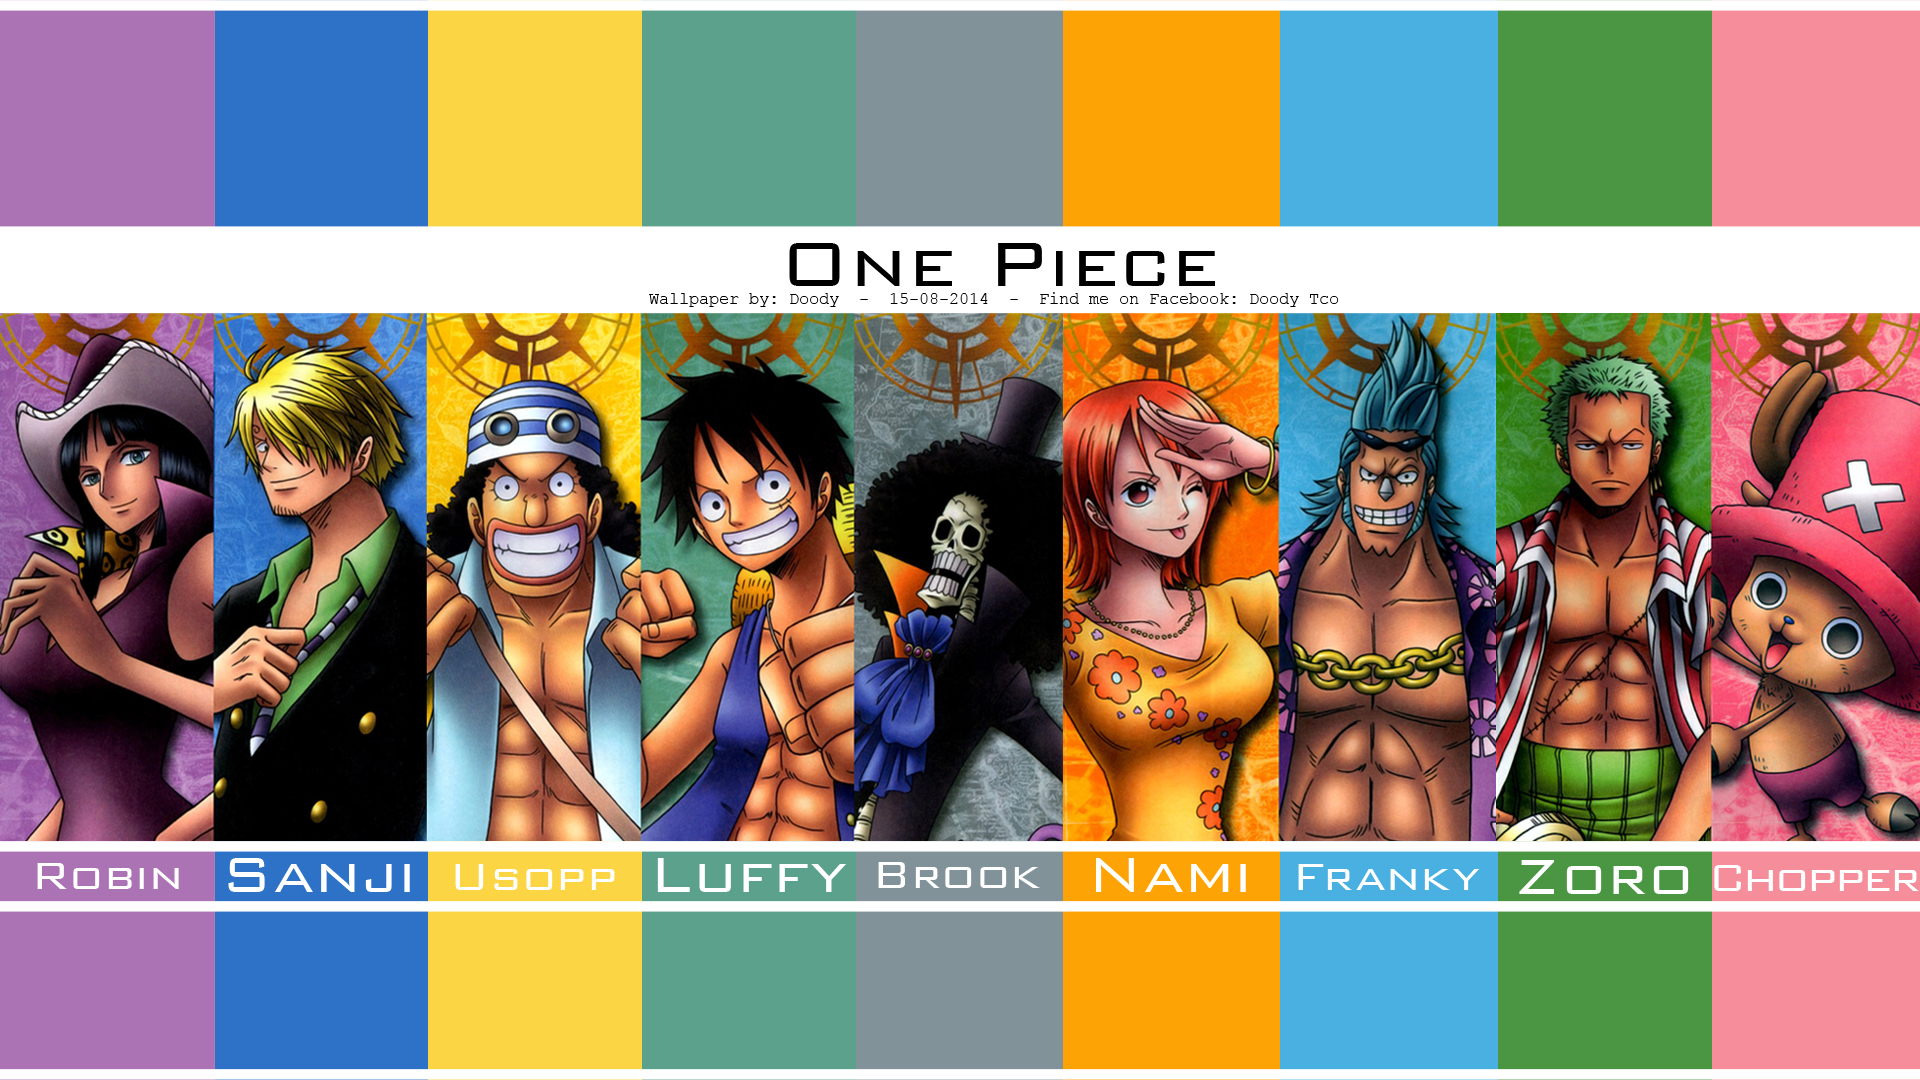 Descarga gratis la imagen Animado, One Piece, Tony Tony Chopper, Usopp (Una Pieza), Roronoa Zoro, Monkey D Luffy, Nami (Una Pieza), Sanji (Una Pieza), Arroyo (Una Pieza), Nico Robin, Franky (Una Pieza) en el escritorio de tu PC